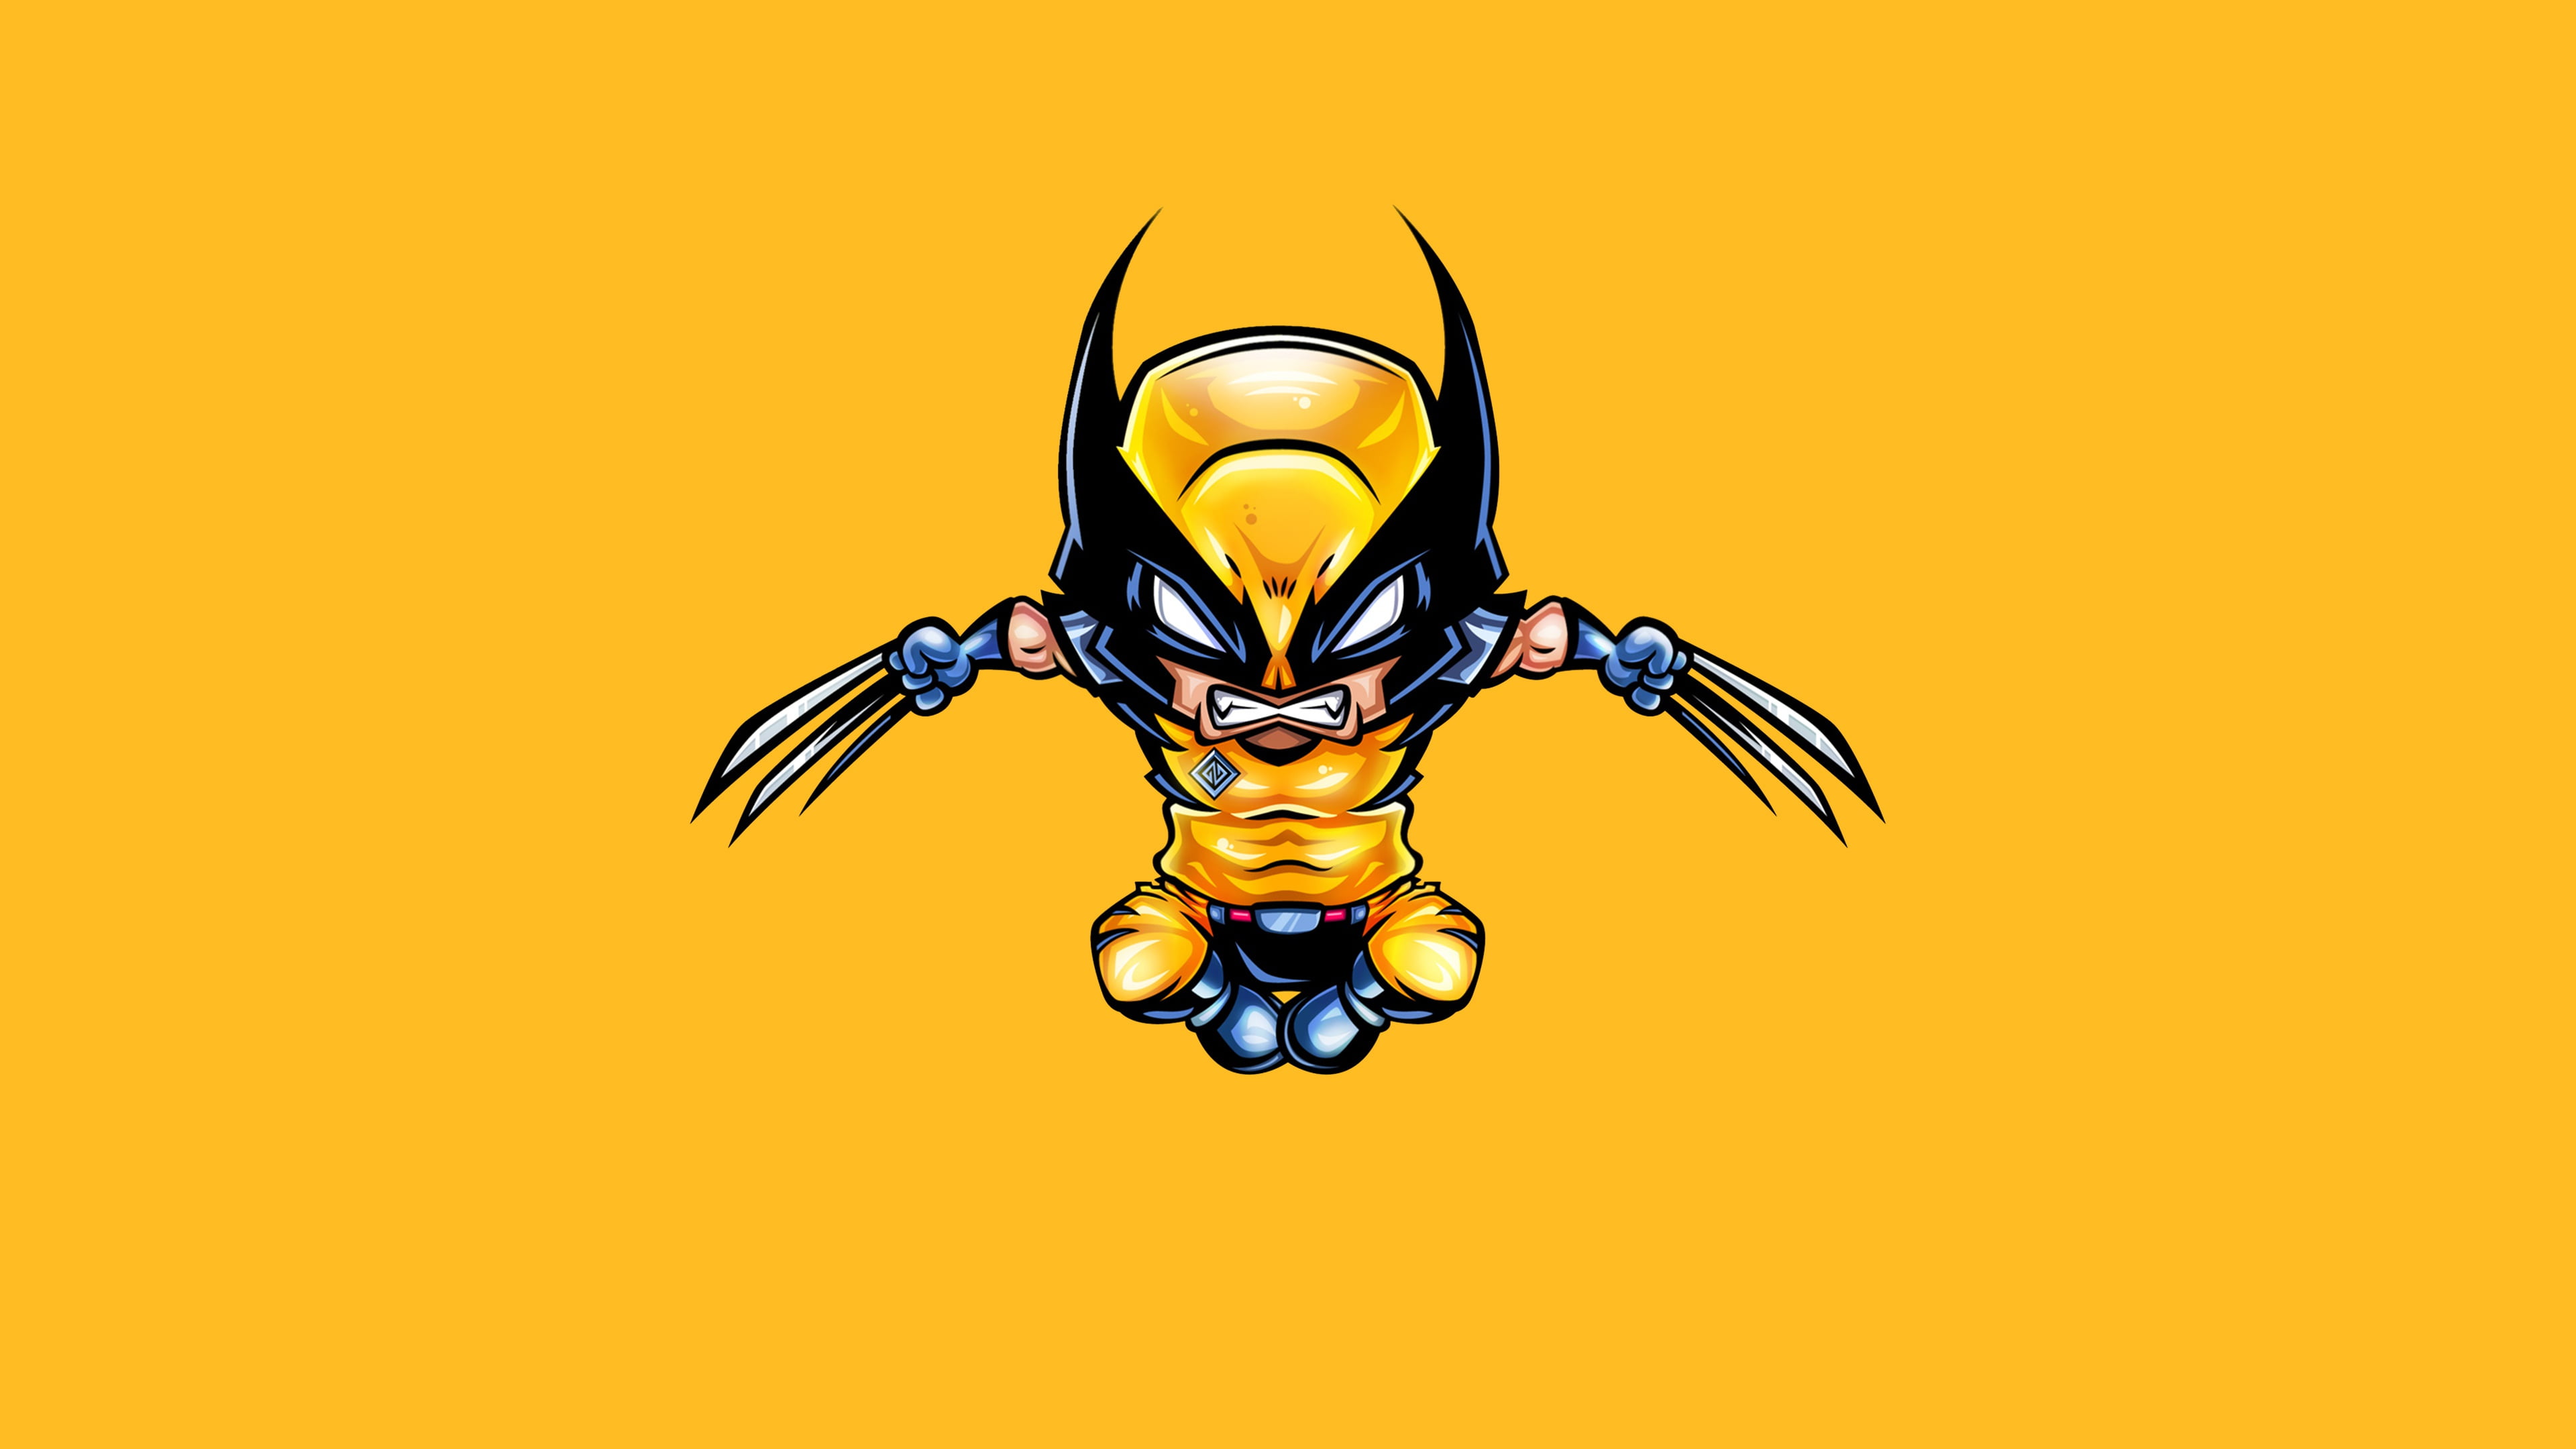 X-Men, Wolverine, Marvel Comics, Minimalist, Yellow